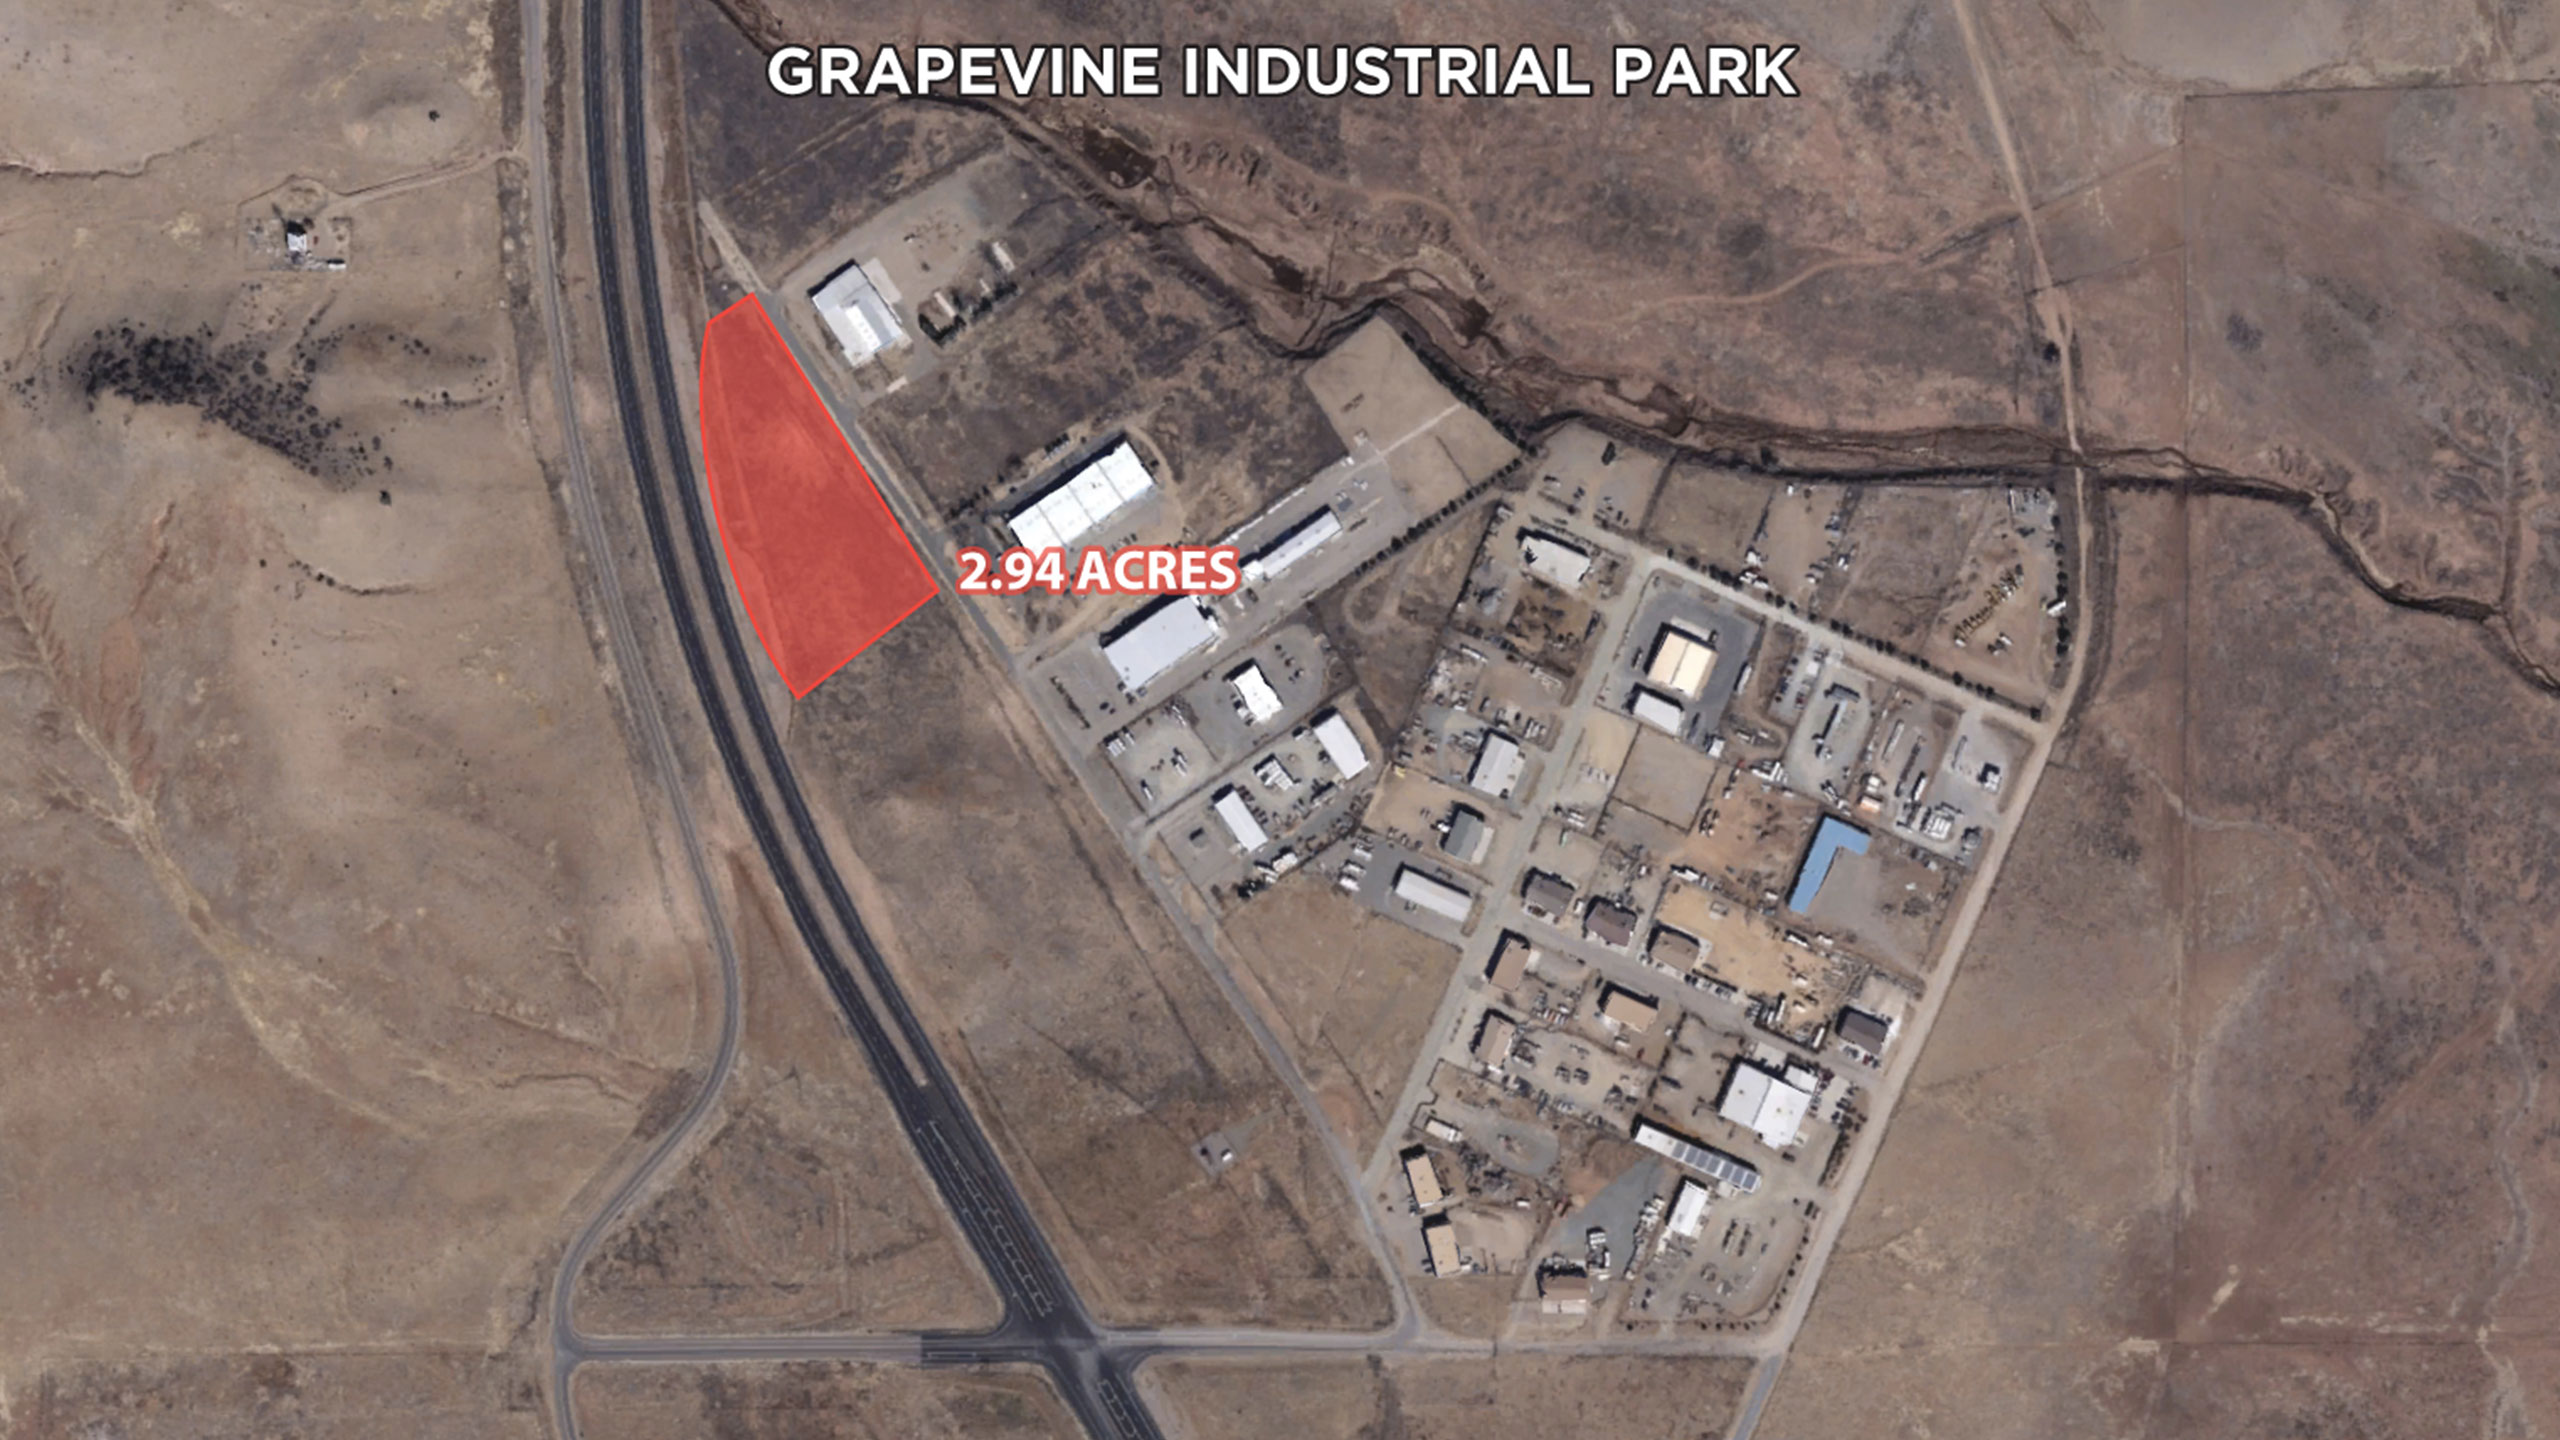 Grapevine Industrial Park